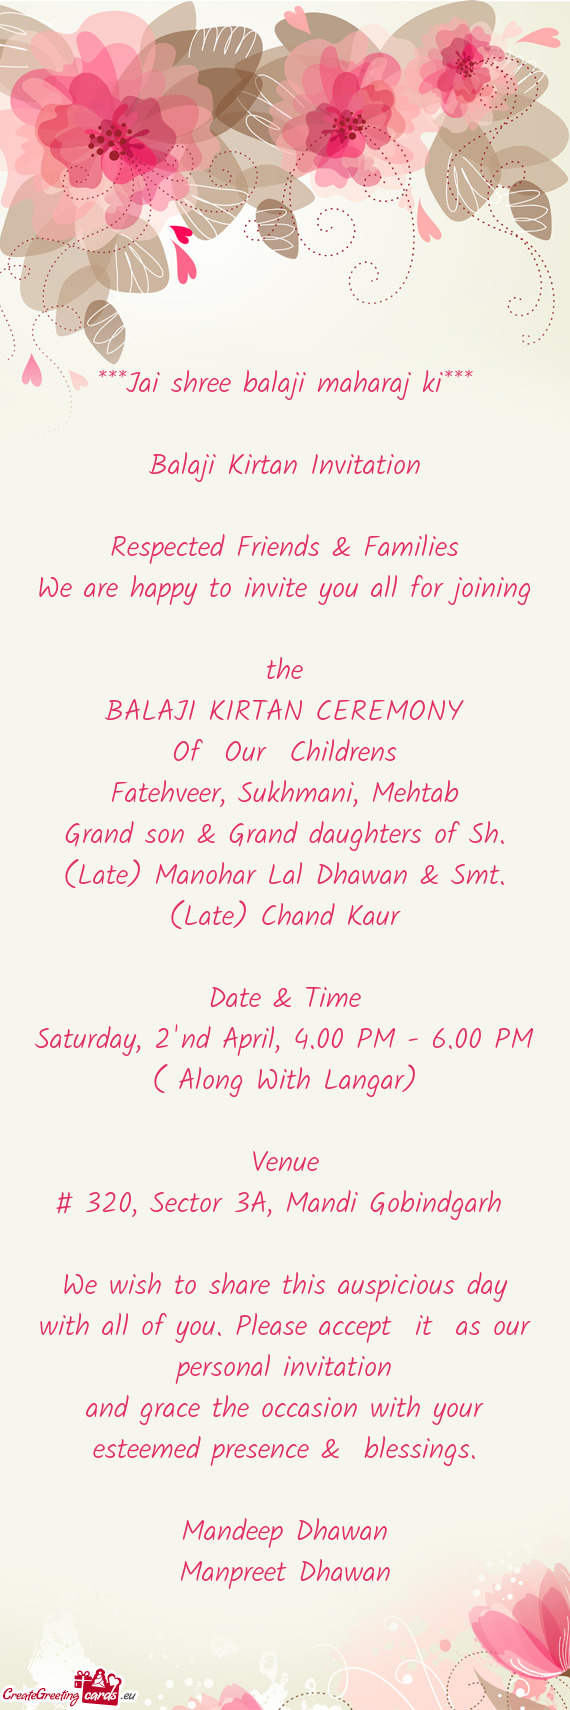 Balaji Kirtan Invitation